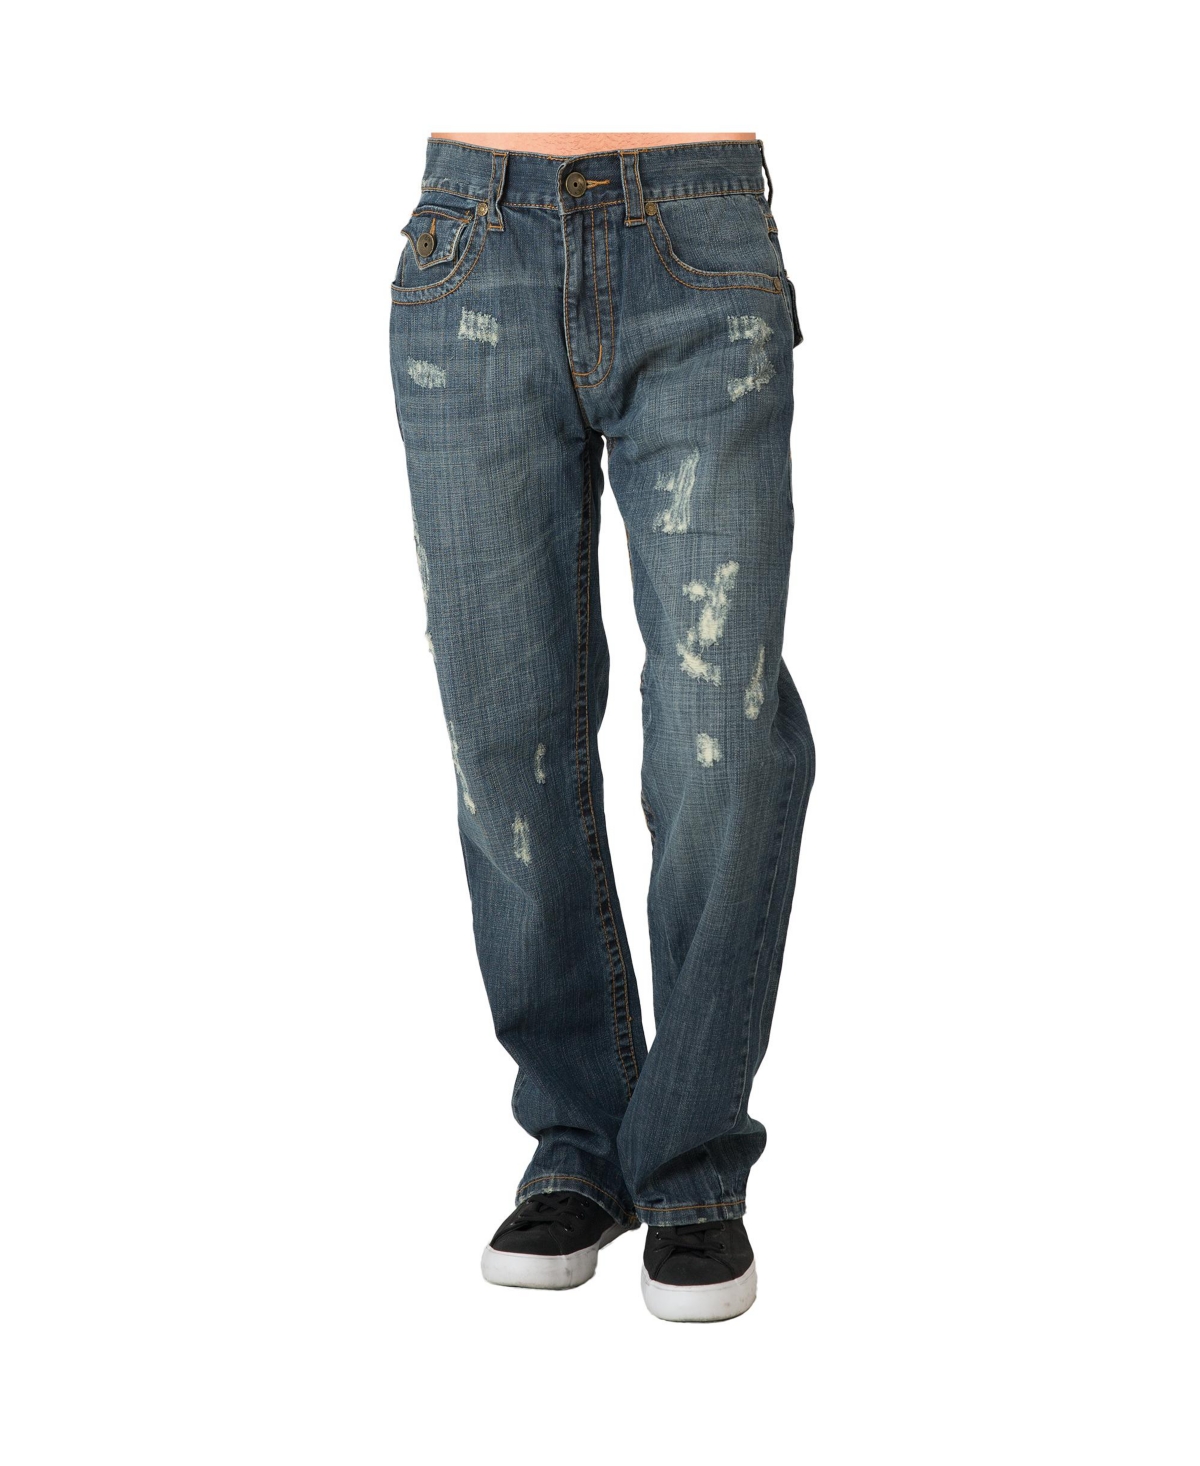 Men's Midrise Relaxed Boot cut Premium Denim Jeans Vintage Like Wash - Dark blue